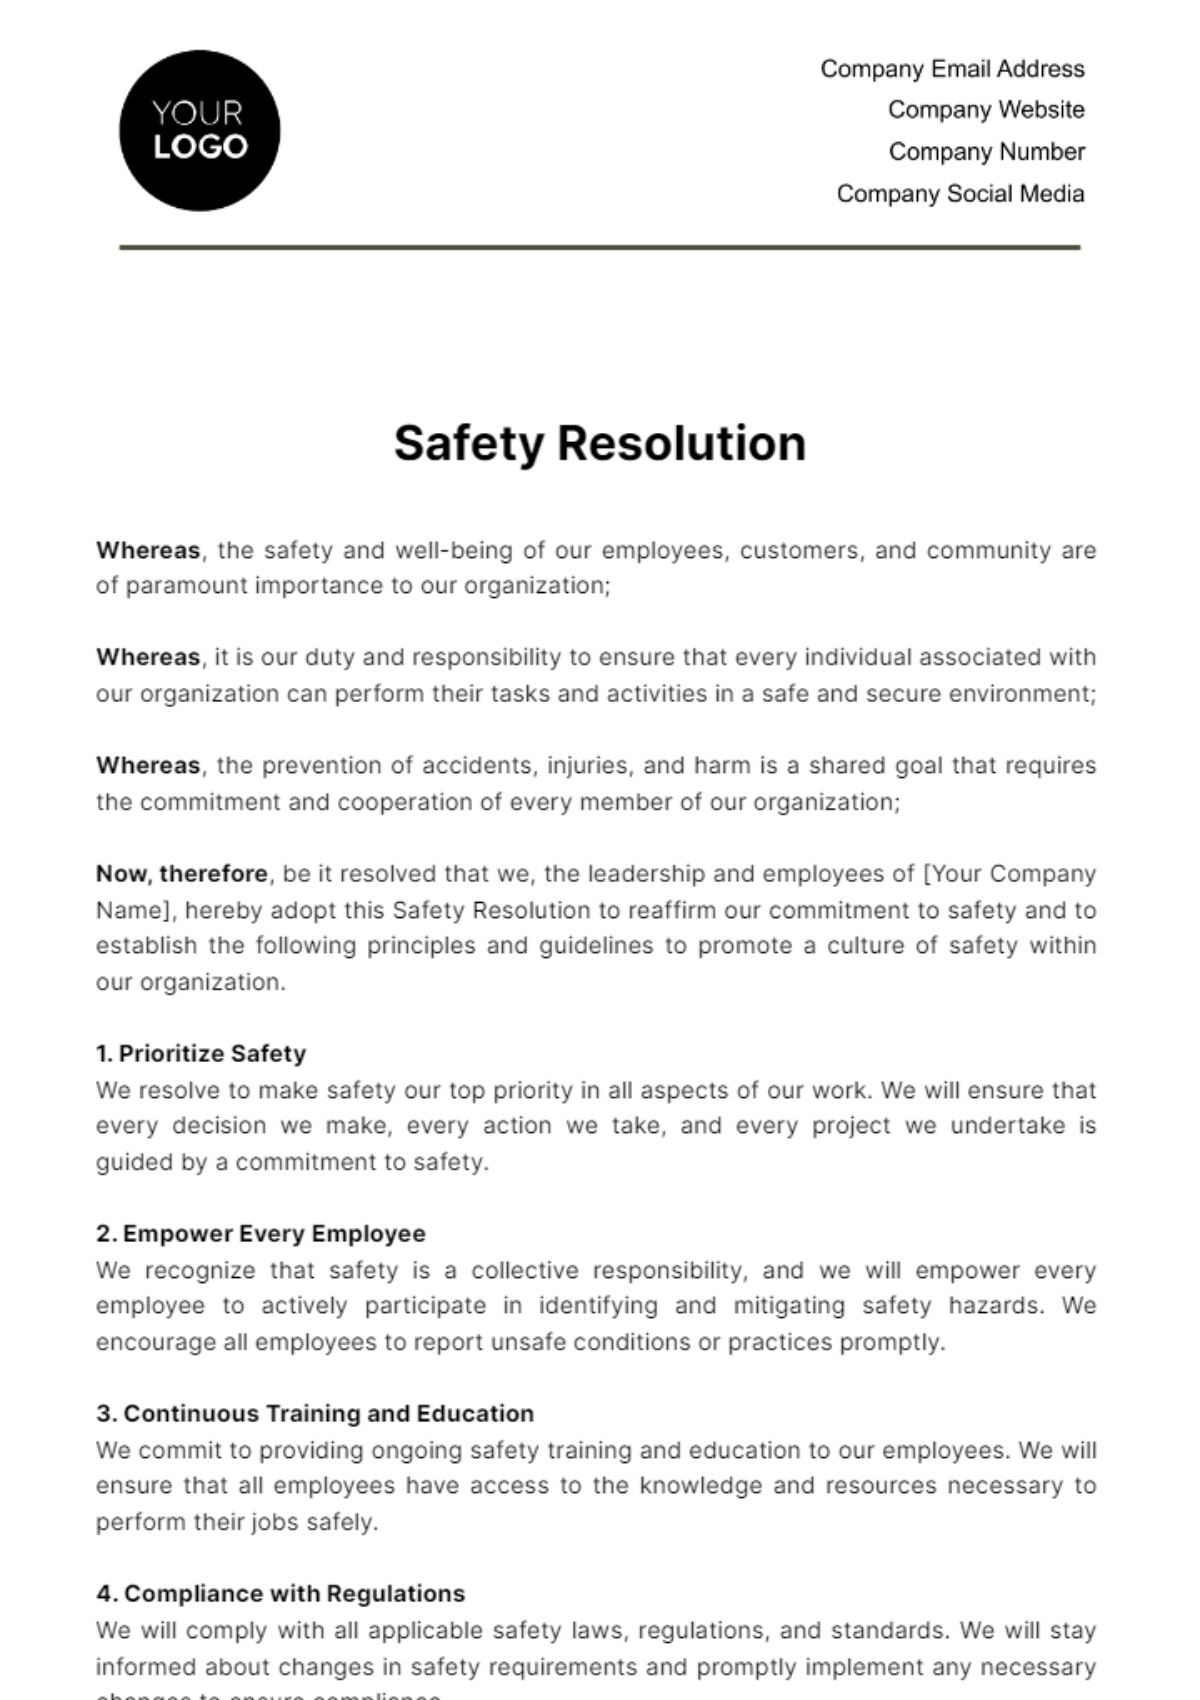 Safety Resolution HR Template